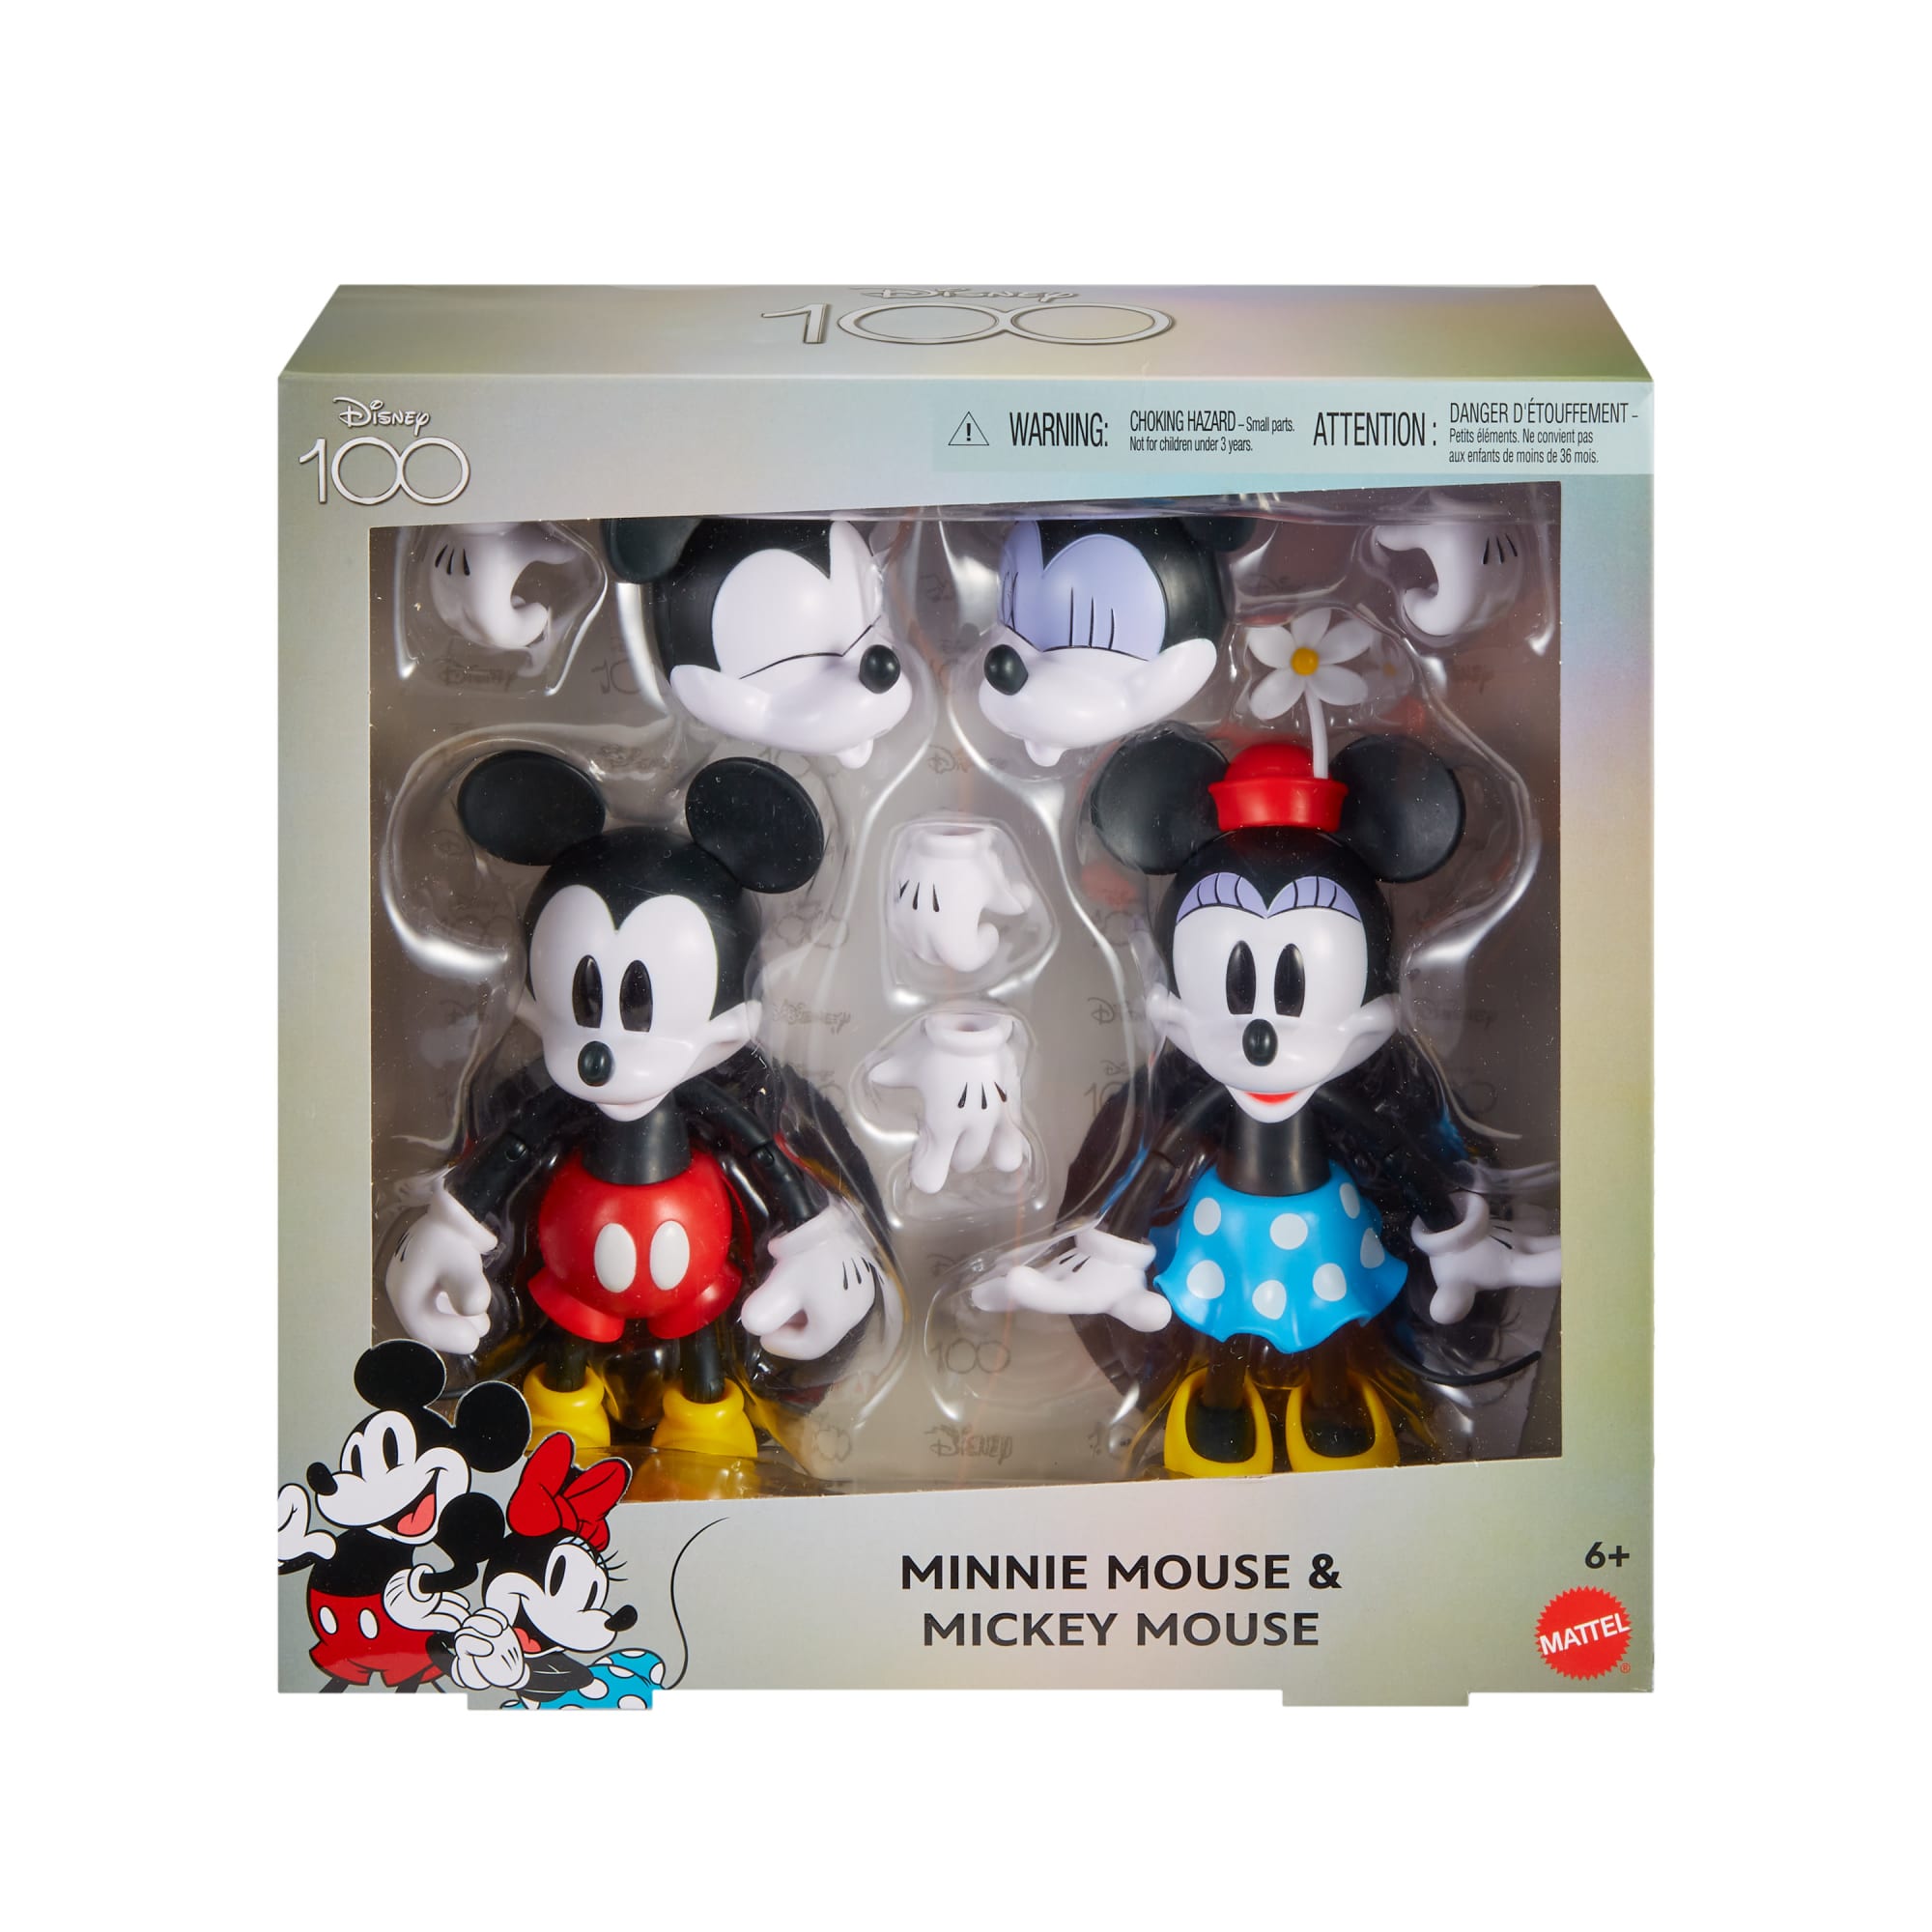 Disney's Minnie Mouse & Mickey Mouse Disney 100 Celebration Pack | Mattel